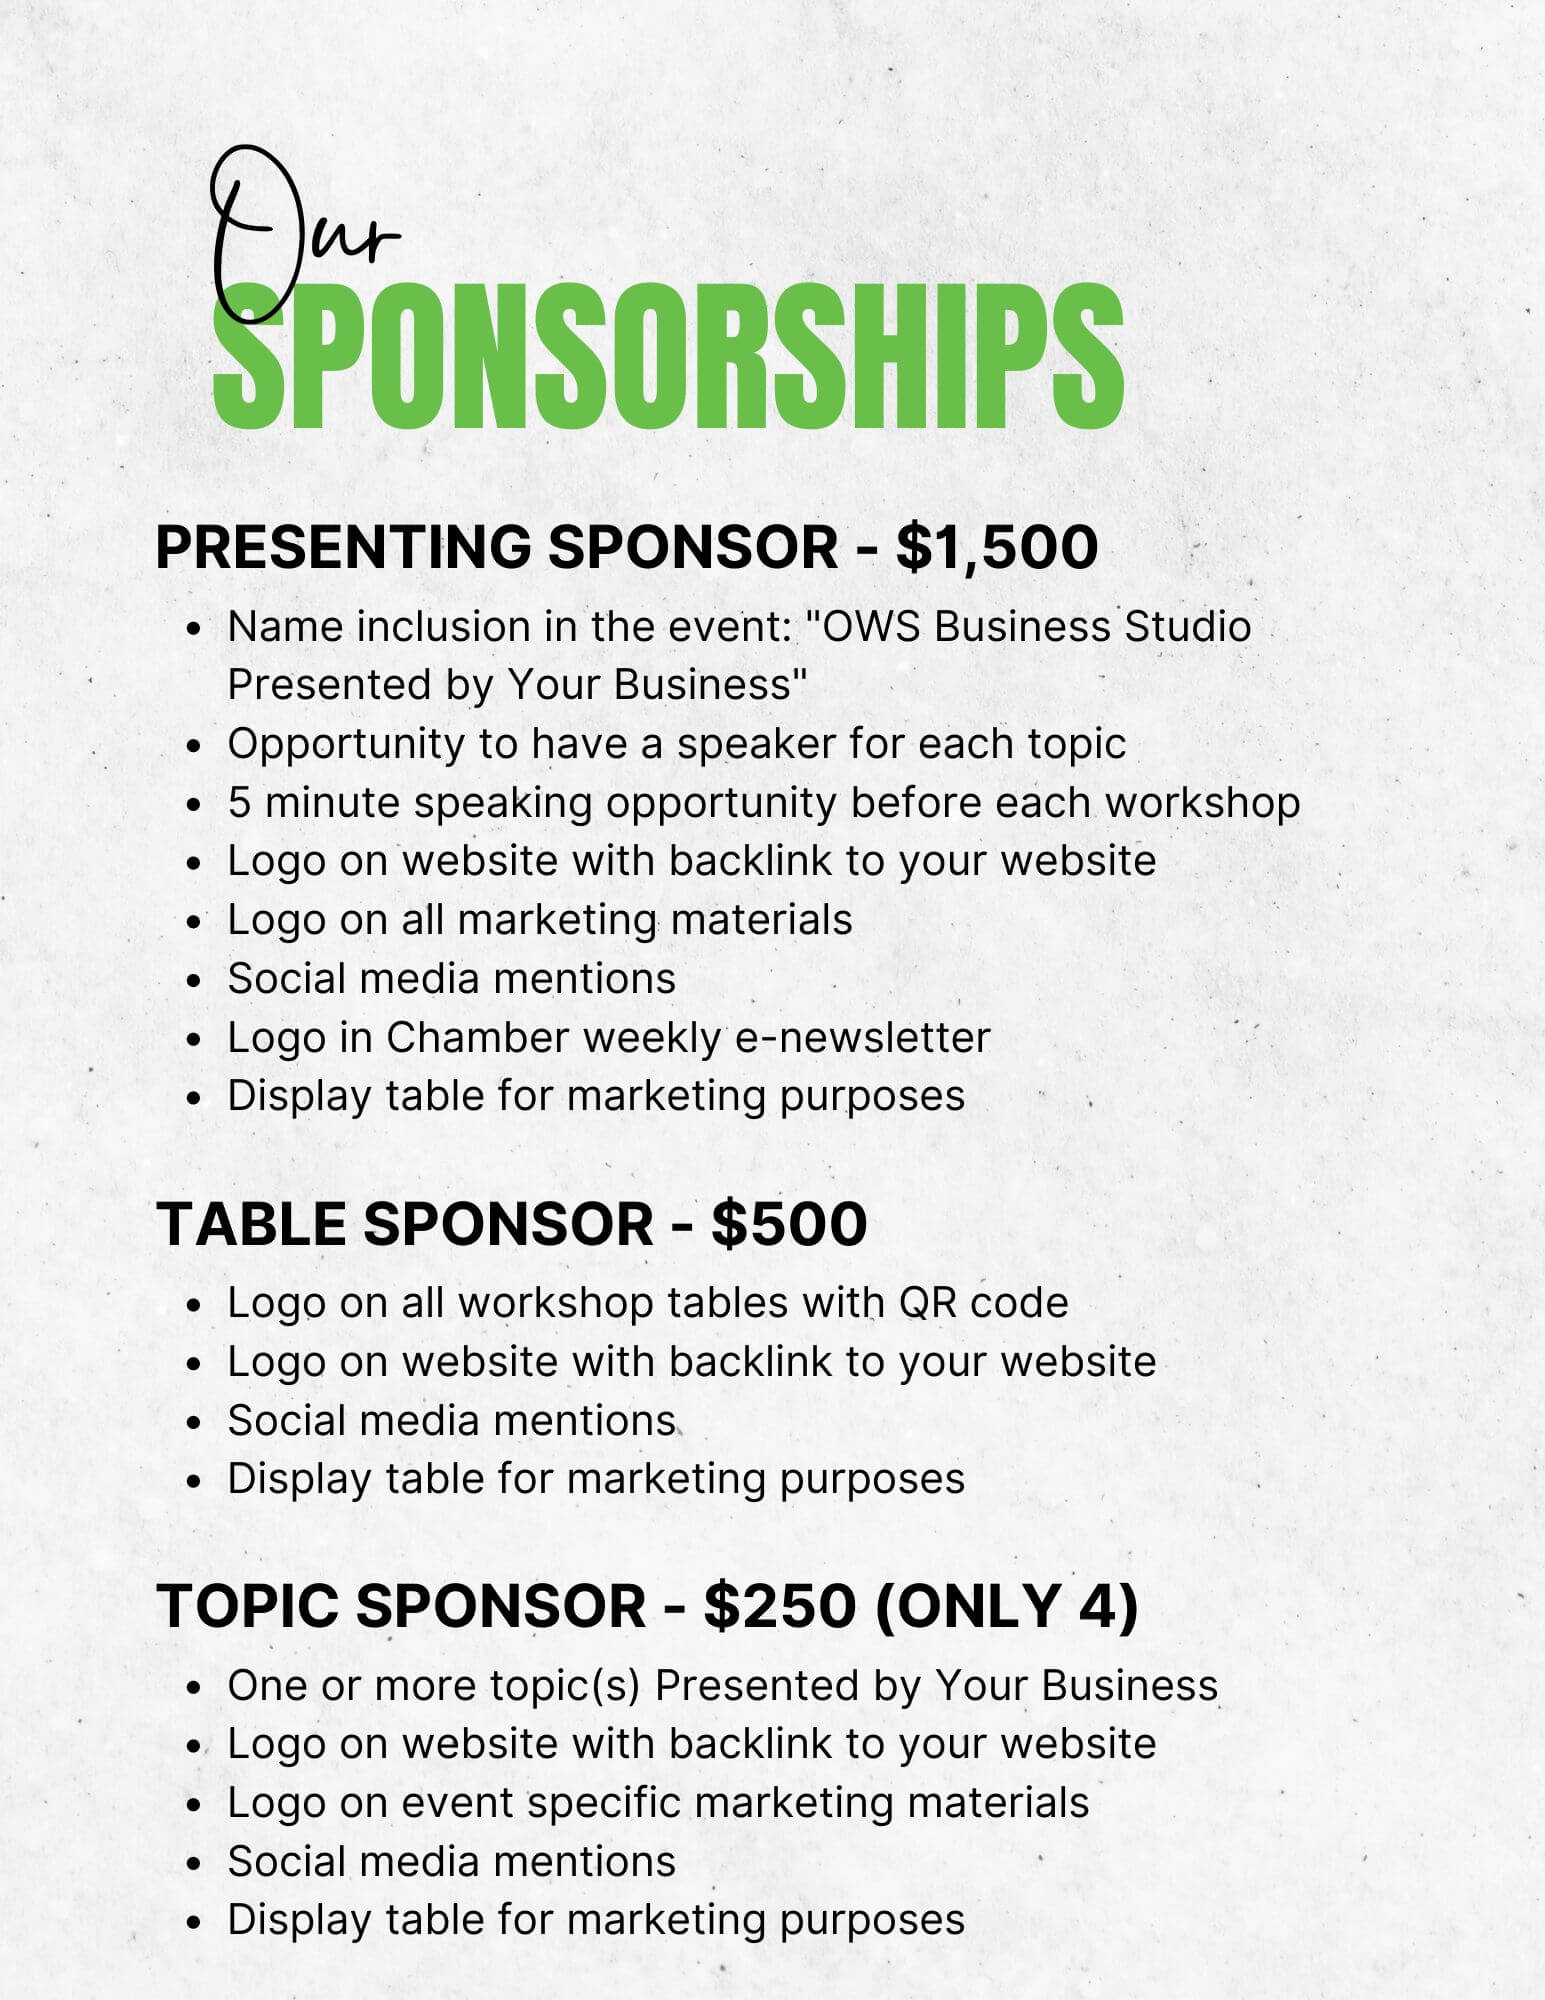 Business Studio Sponsorships